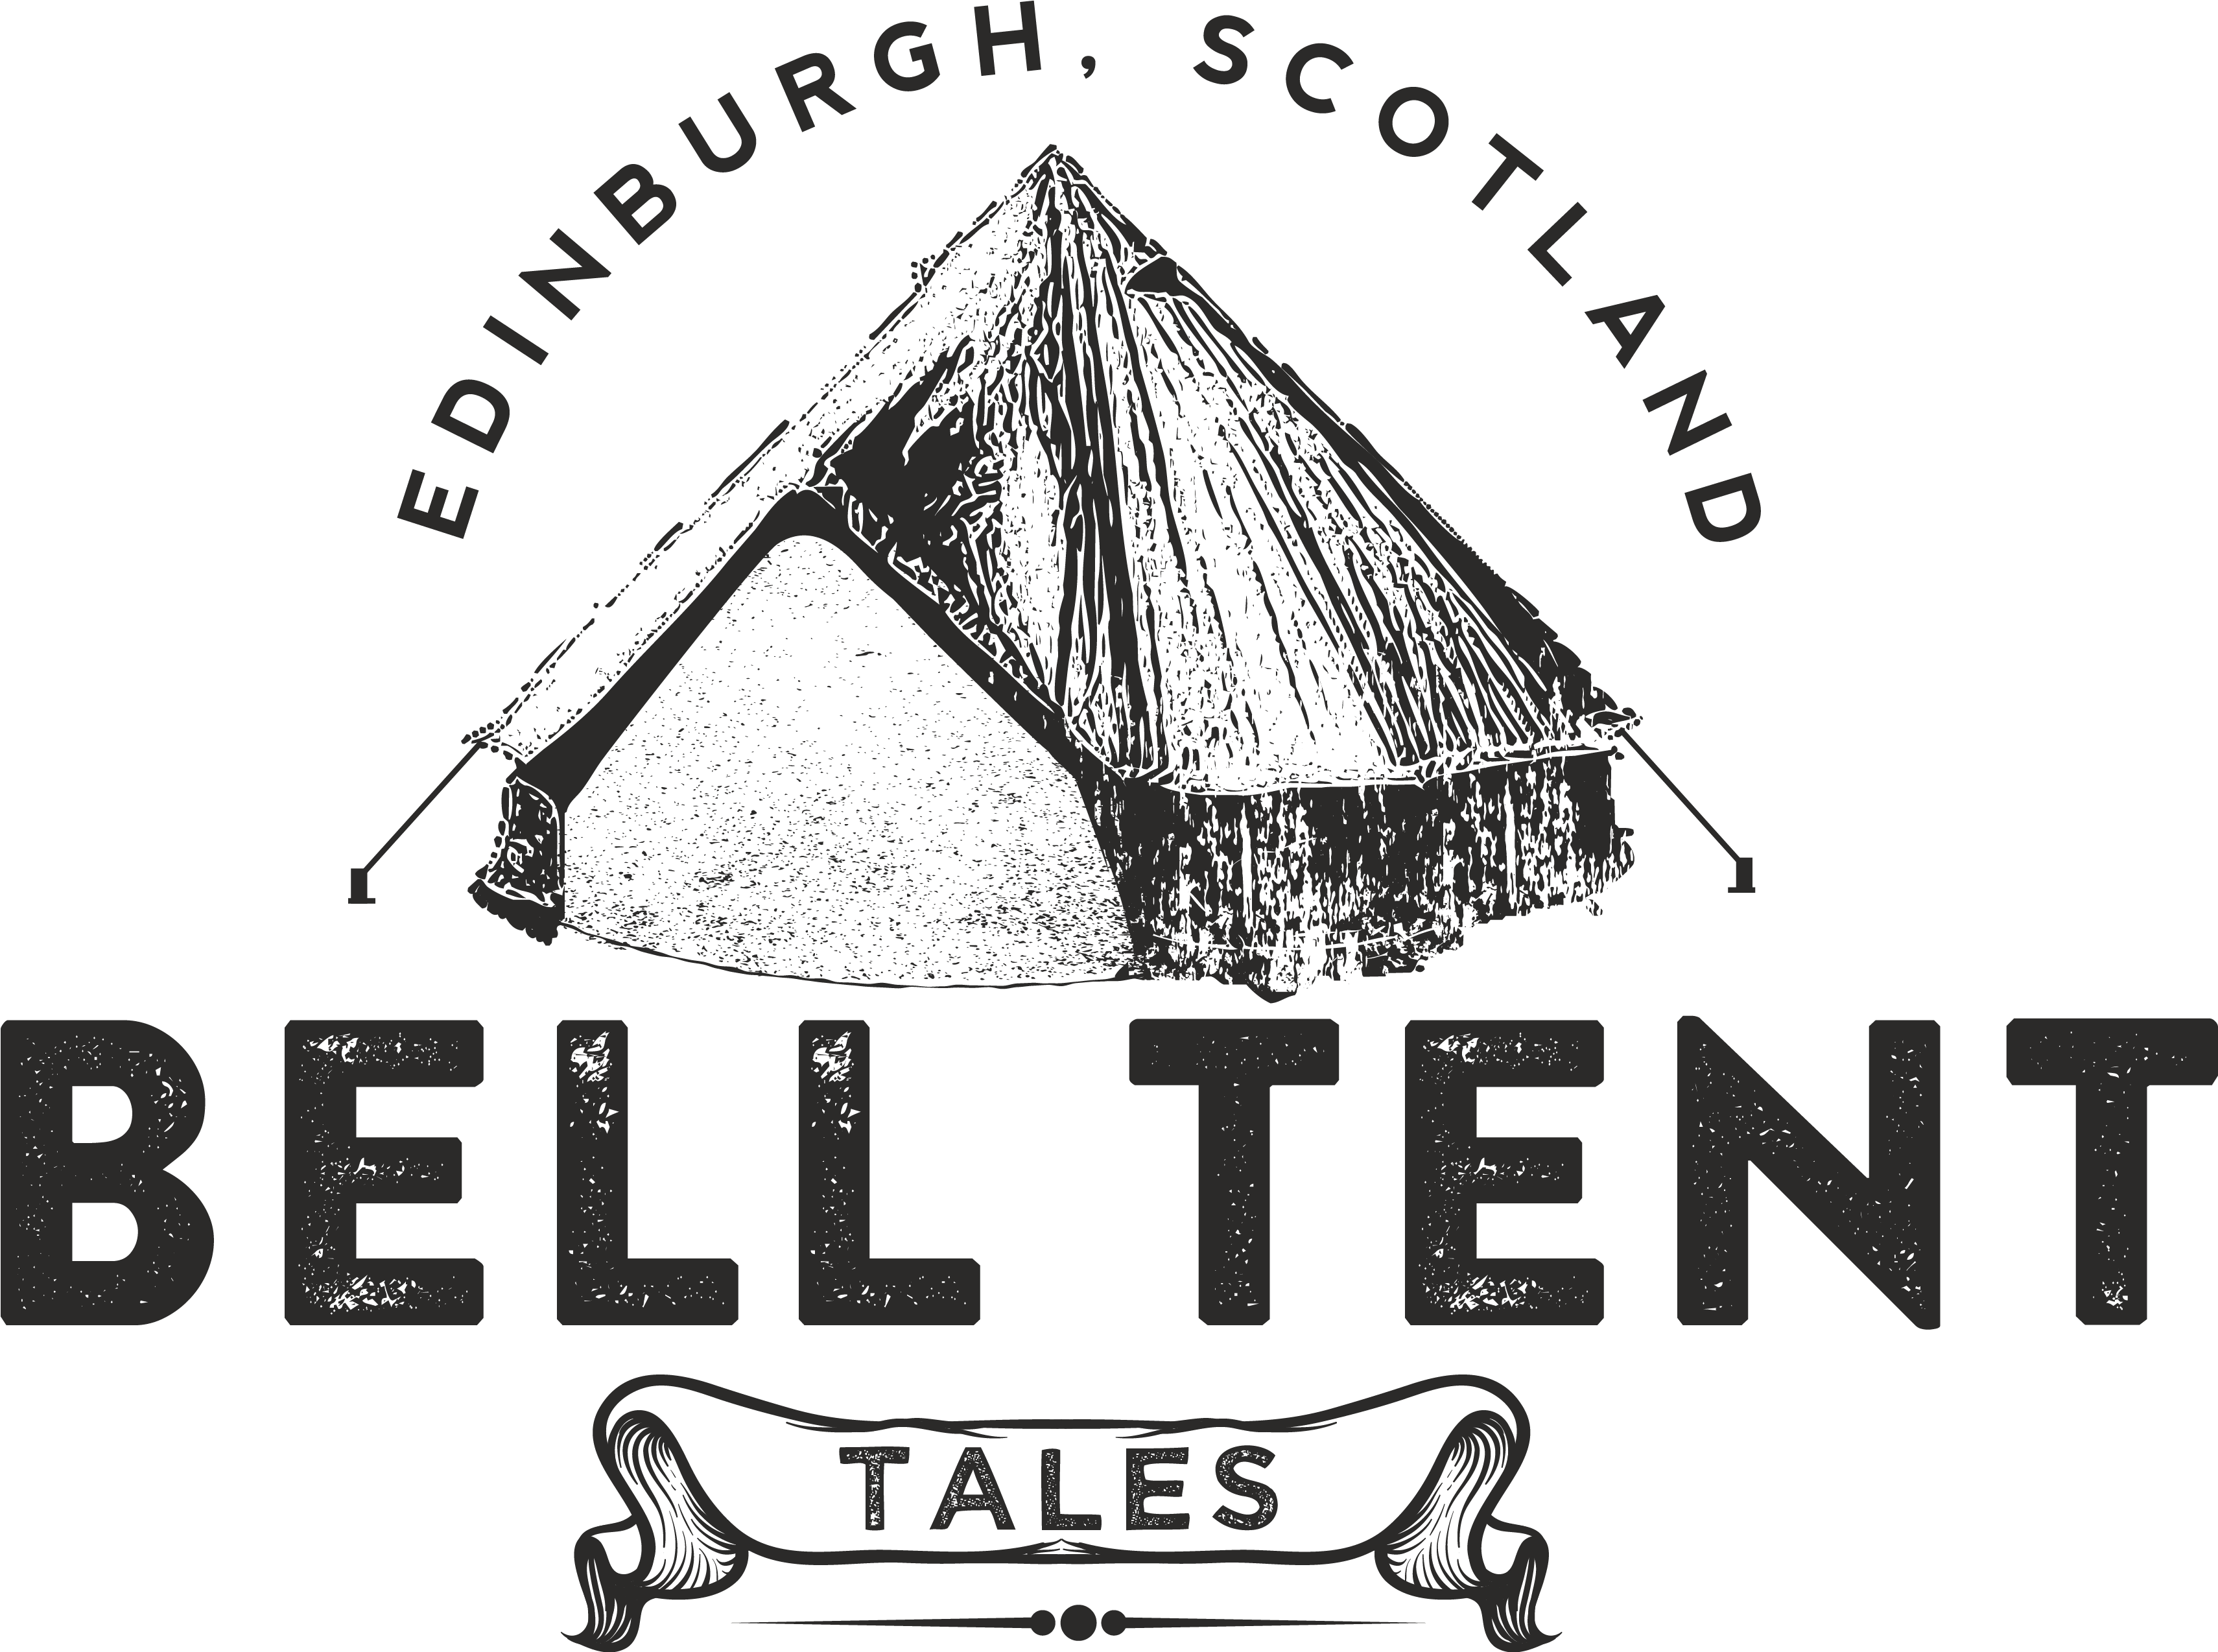 Bell Tent Tales - Elements Casino Brantford (3502x2547)